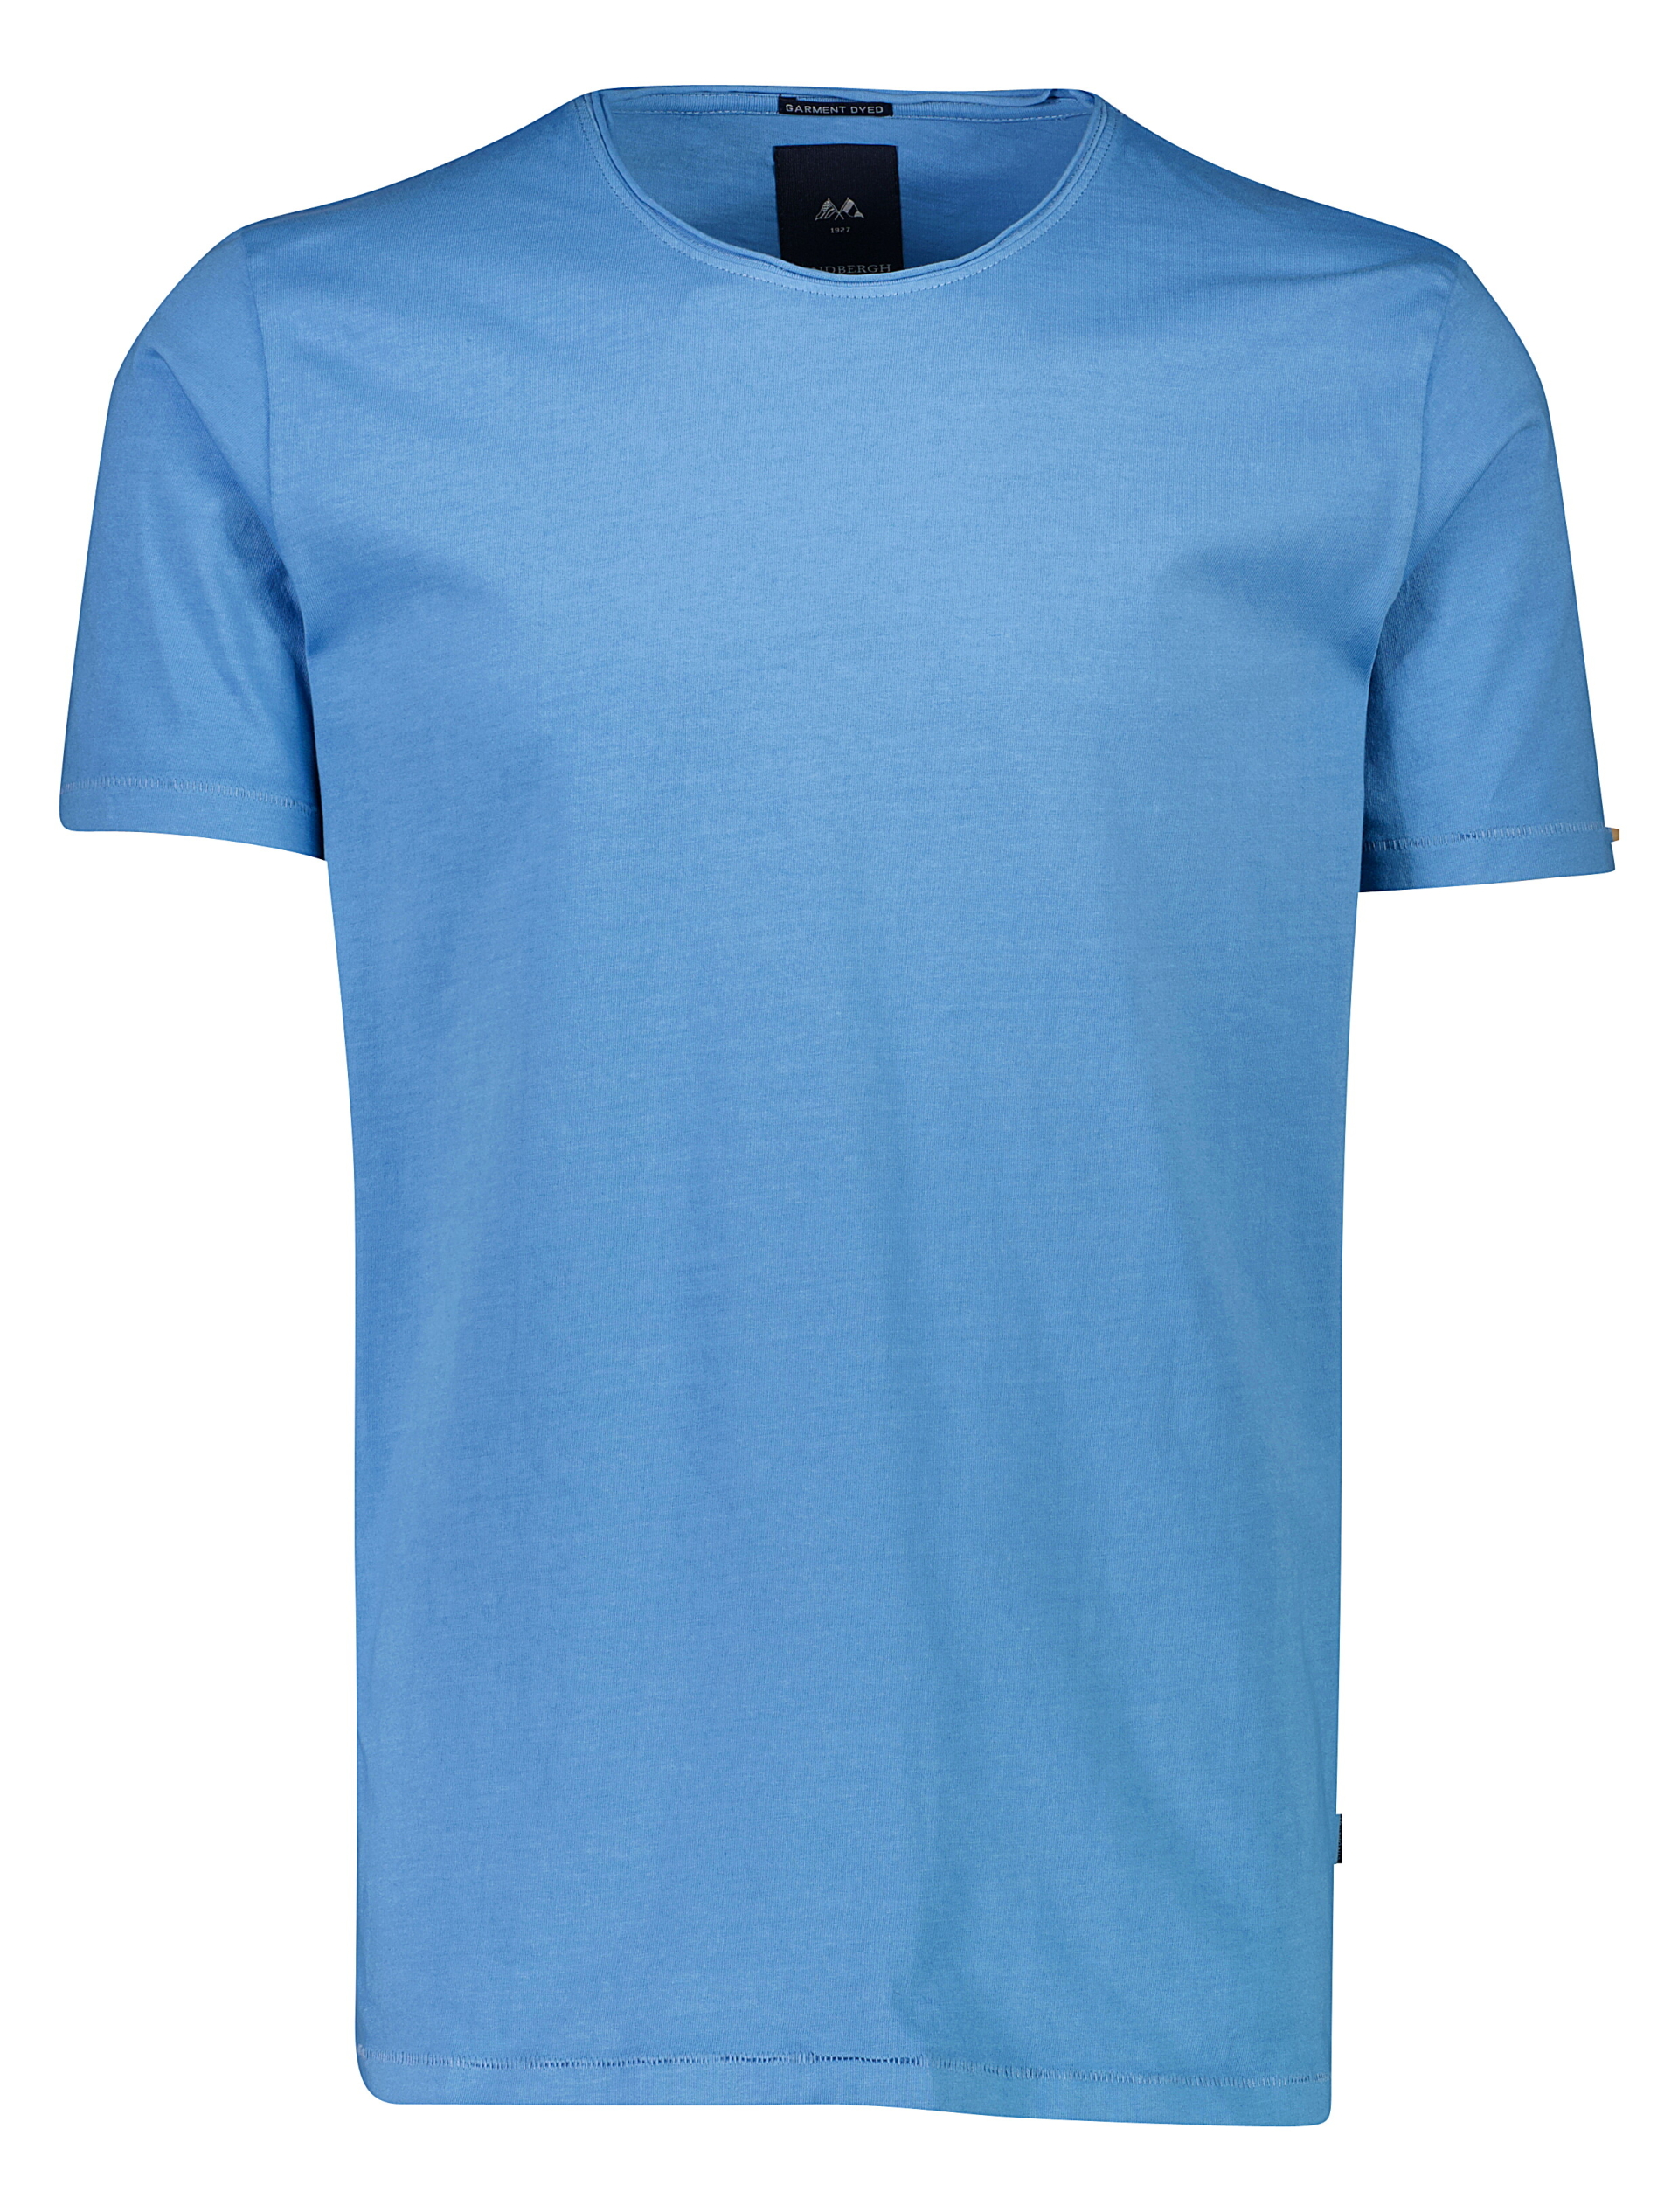 Lindbergh T-shirt blå / mid blue